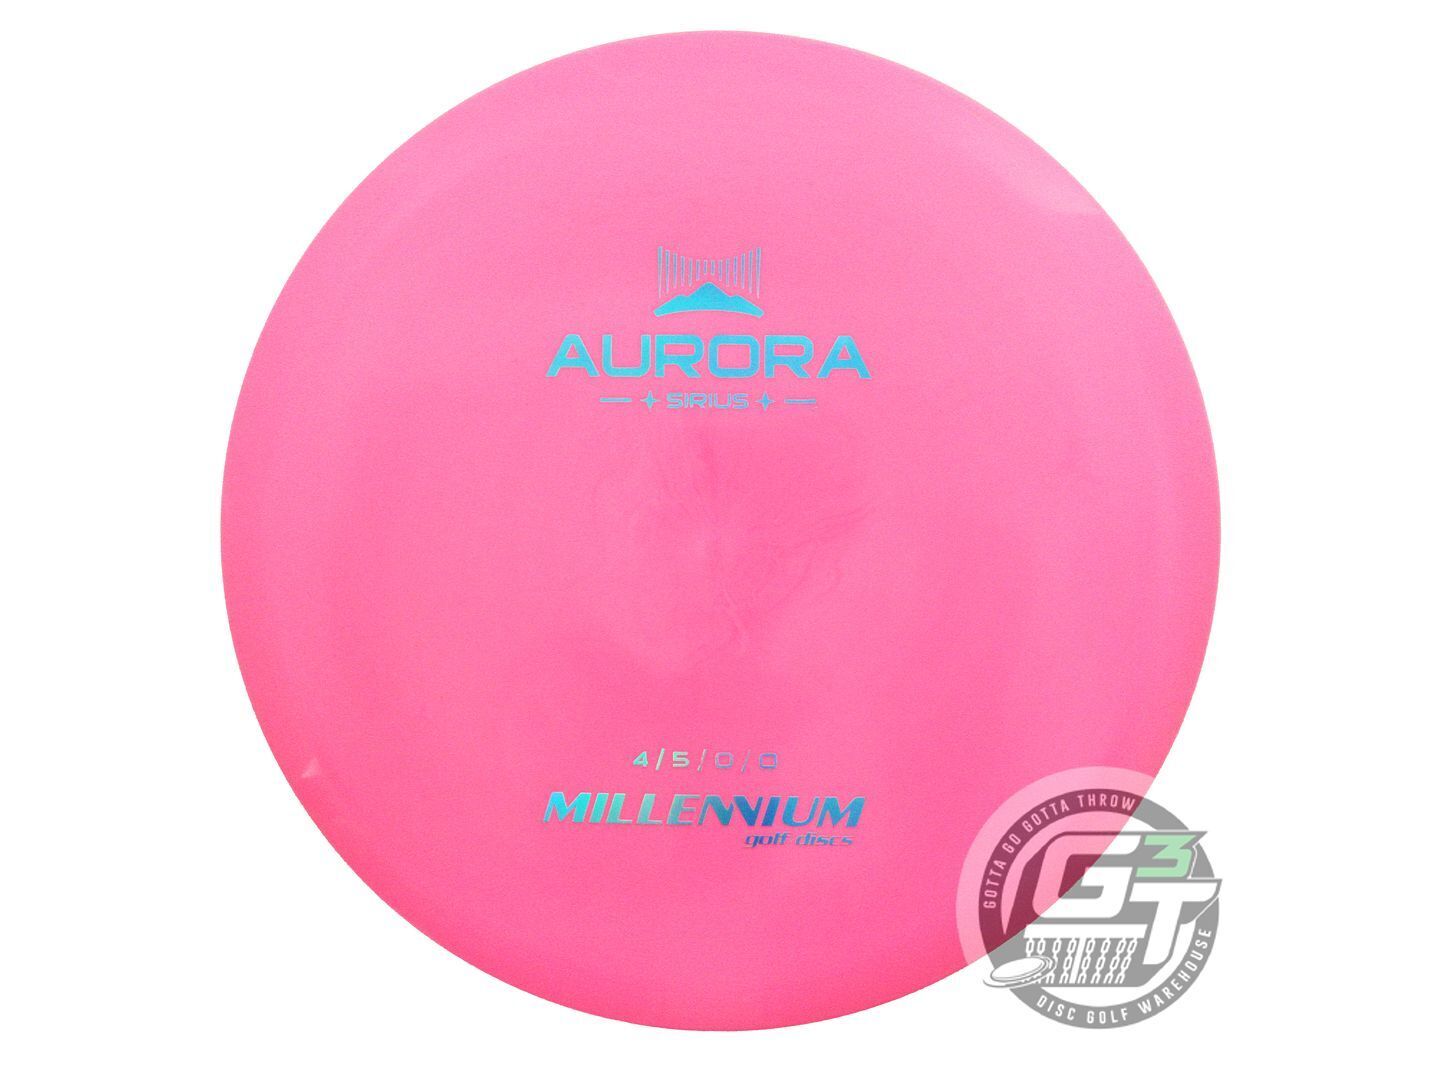 Millennium Sirius Aurora MS Midrange Golf Disc (Individually Listed)